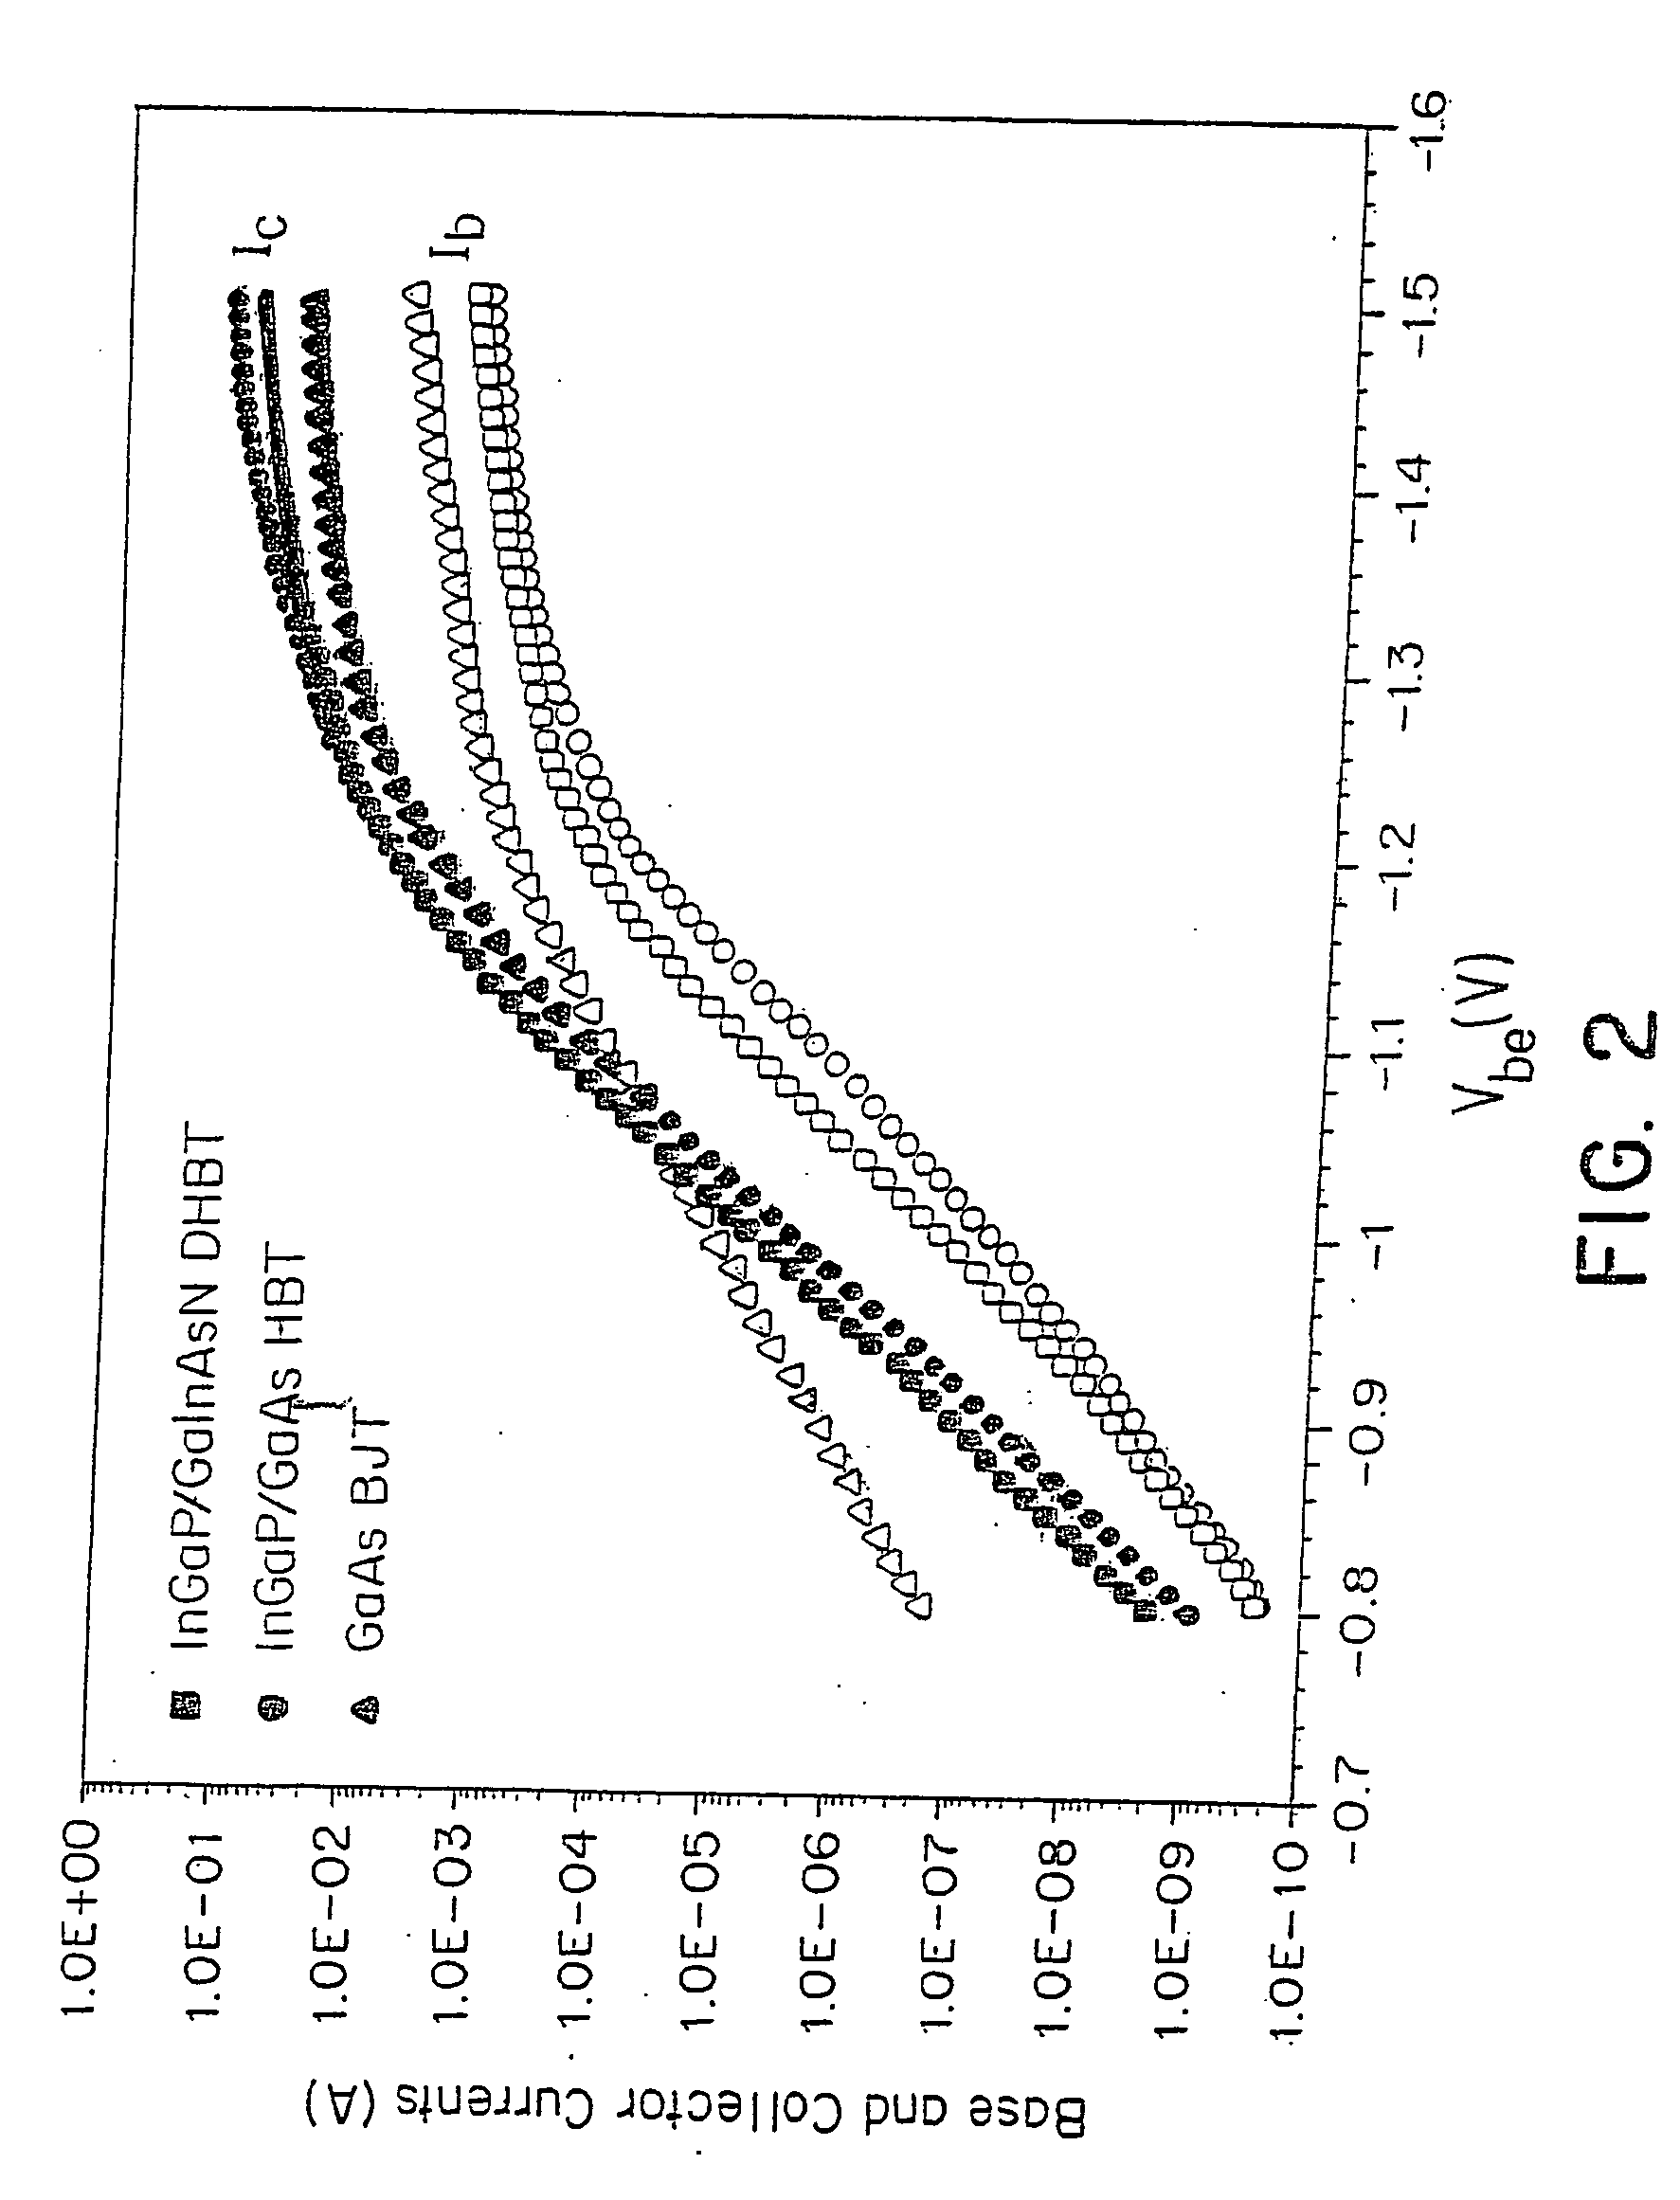 Bipolar transistor with graded base layer